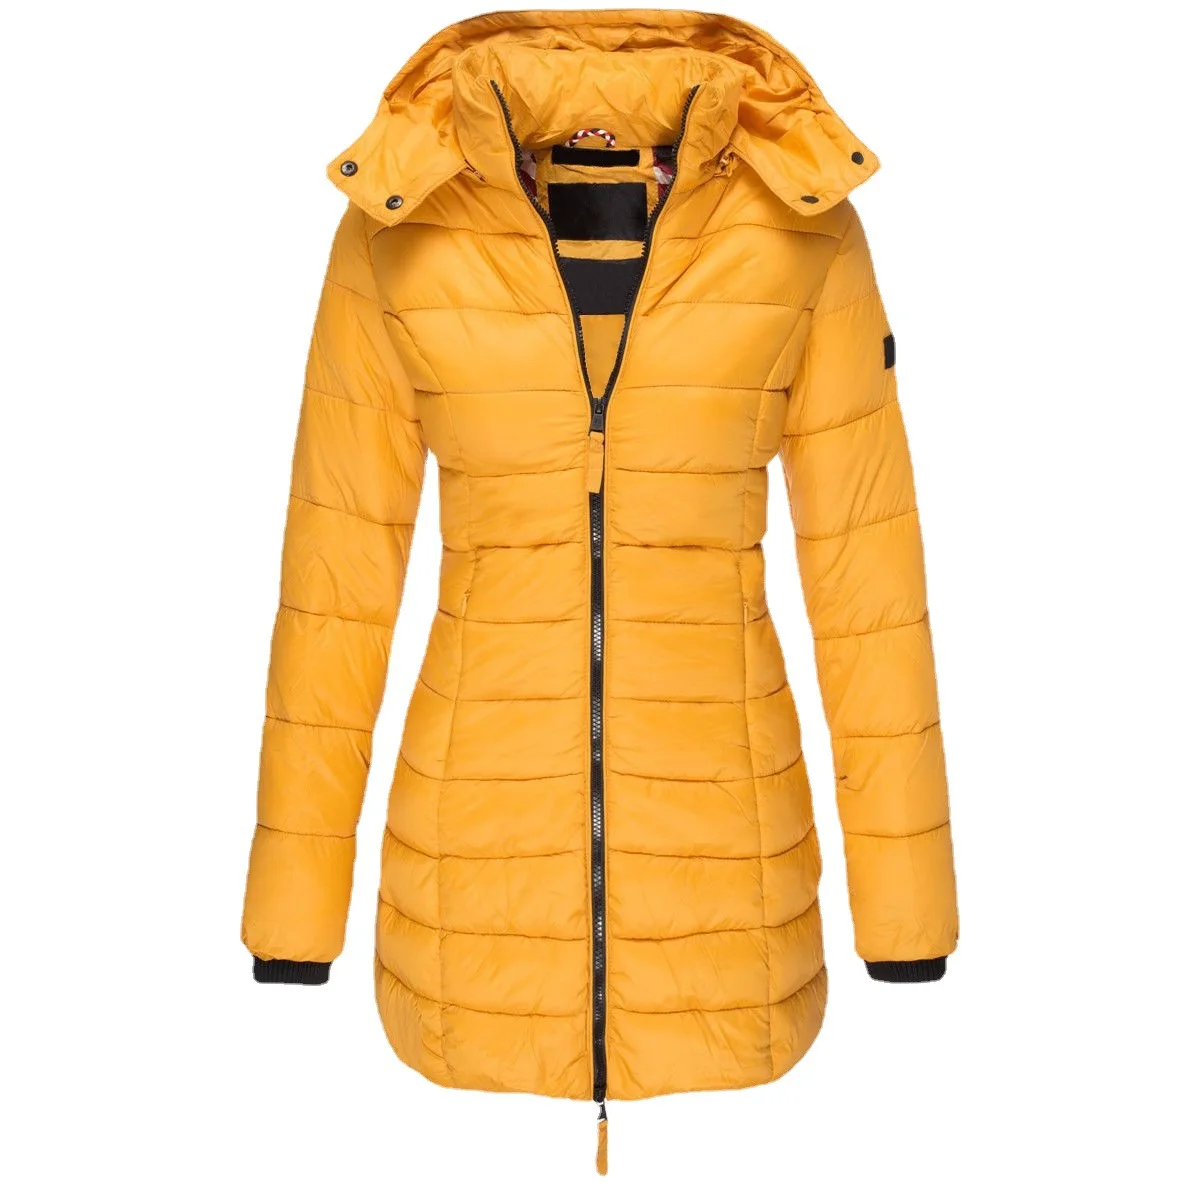 Winter Women's Cotton Jacket Medium Length Slim Fitting Cotton Jacket Warm Solid Hooded Cotton Jacket enlarge